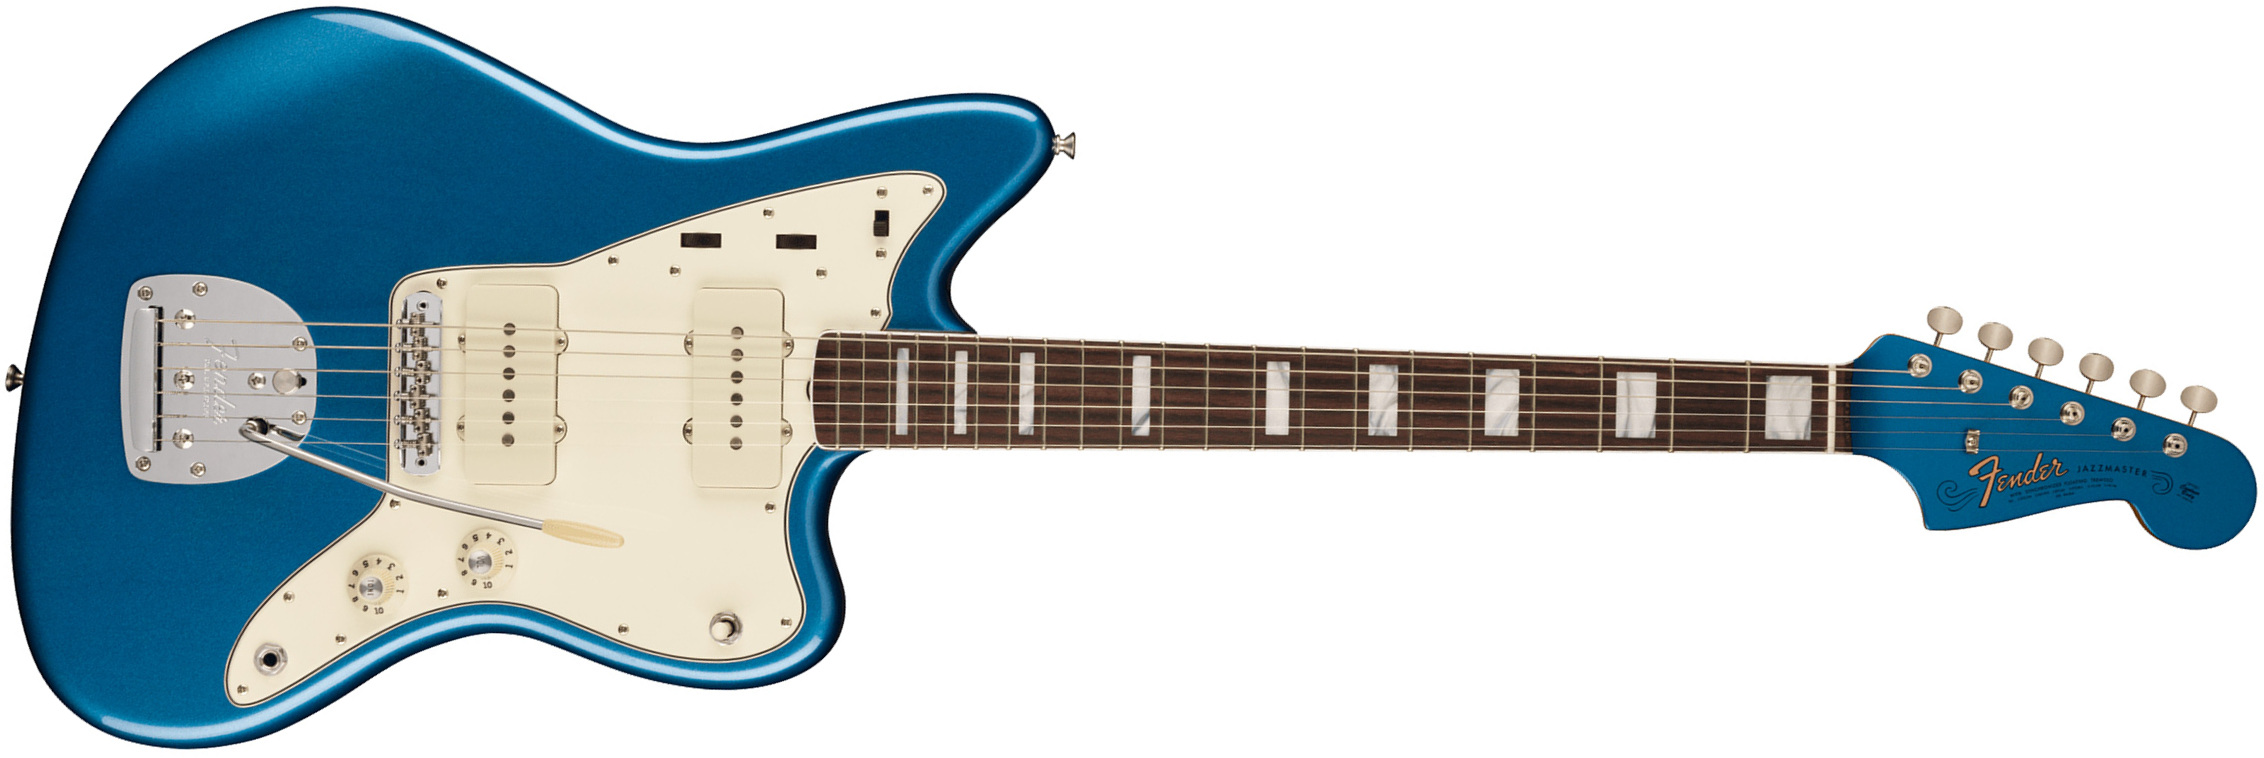 Fender Jazzmaster 1966 American Vintage Ii Usa Sh Trem Rw - Lake Placid Blue - Guitarra electrica retro rock - Main picture